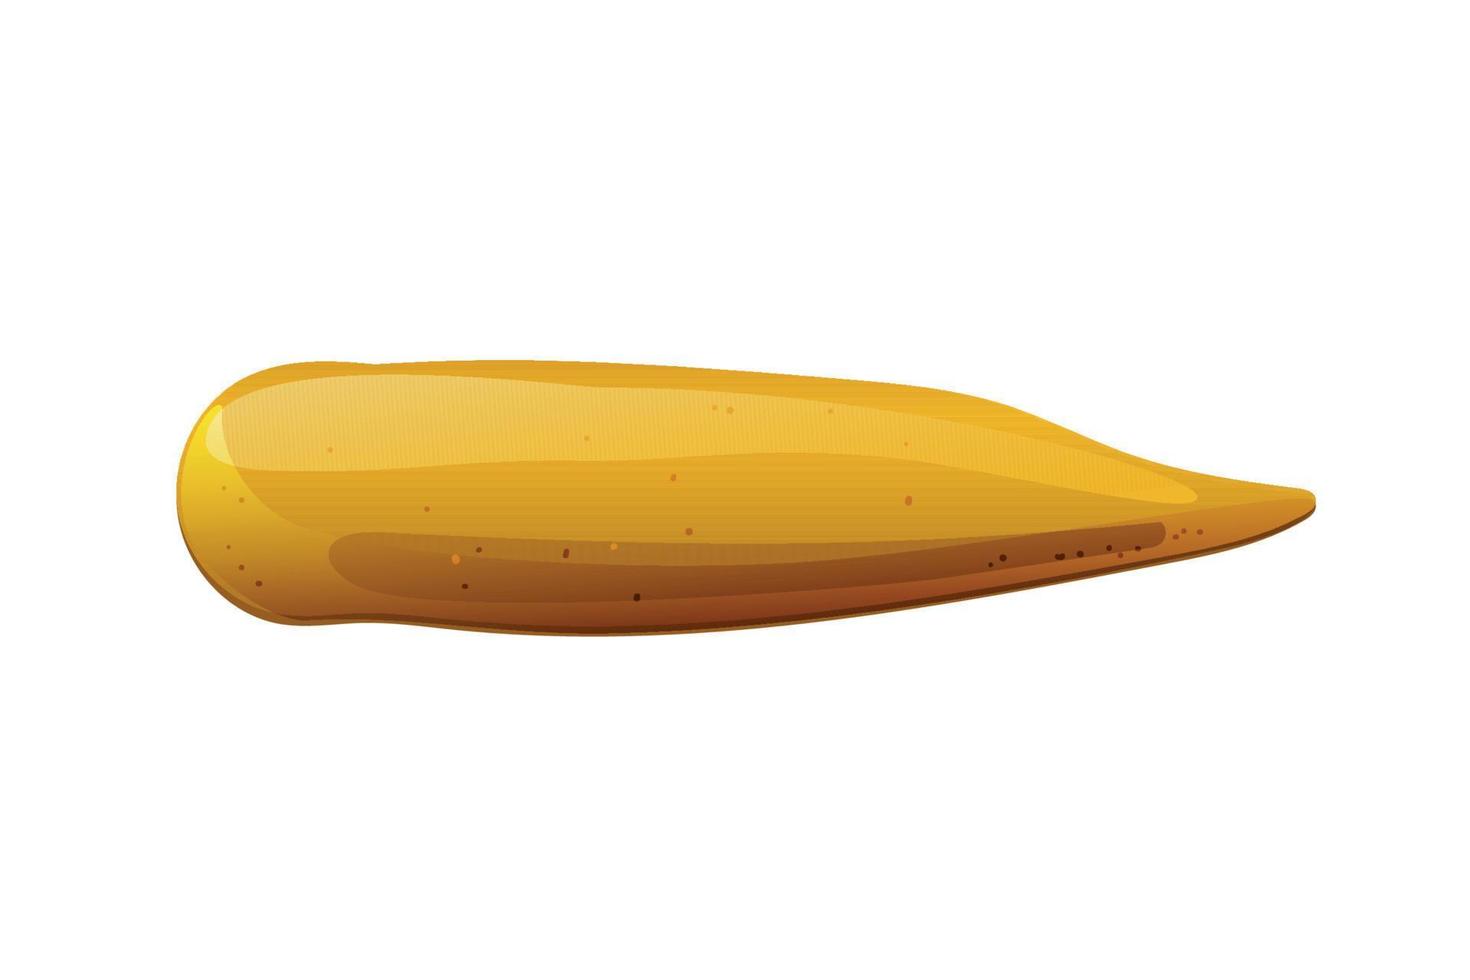 Mustard yellow stain. Dijon honey sauce cream. Vector design in cartoon style for food branding.